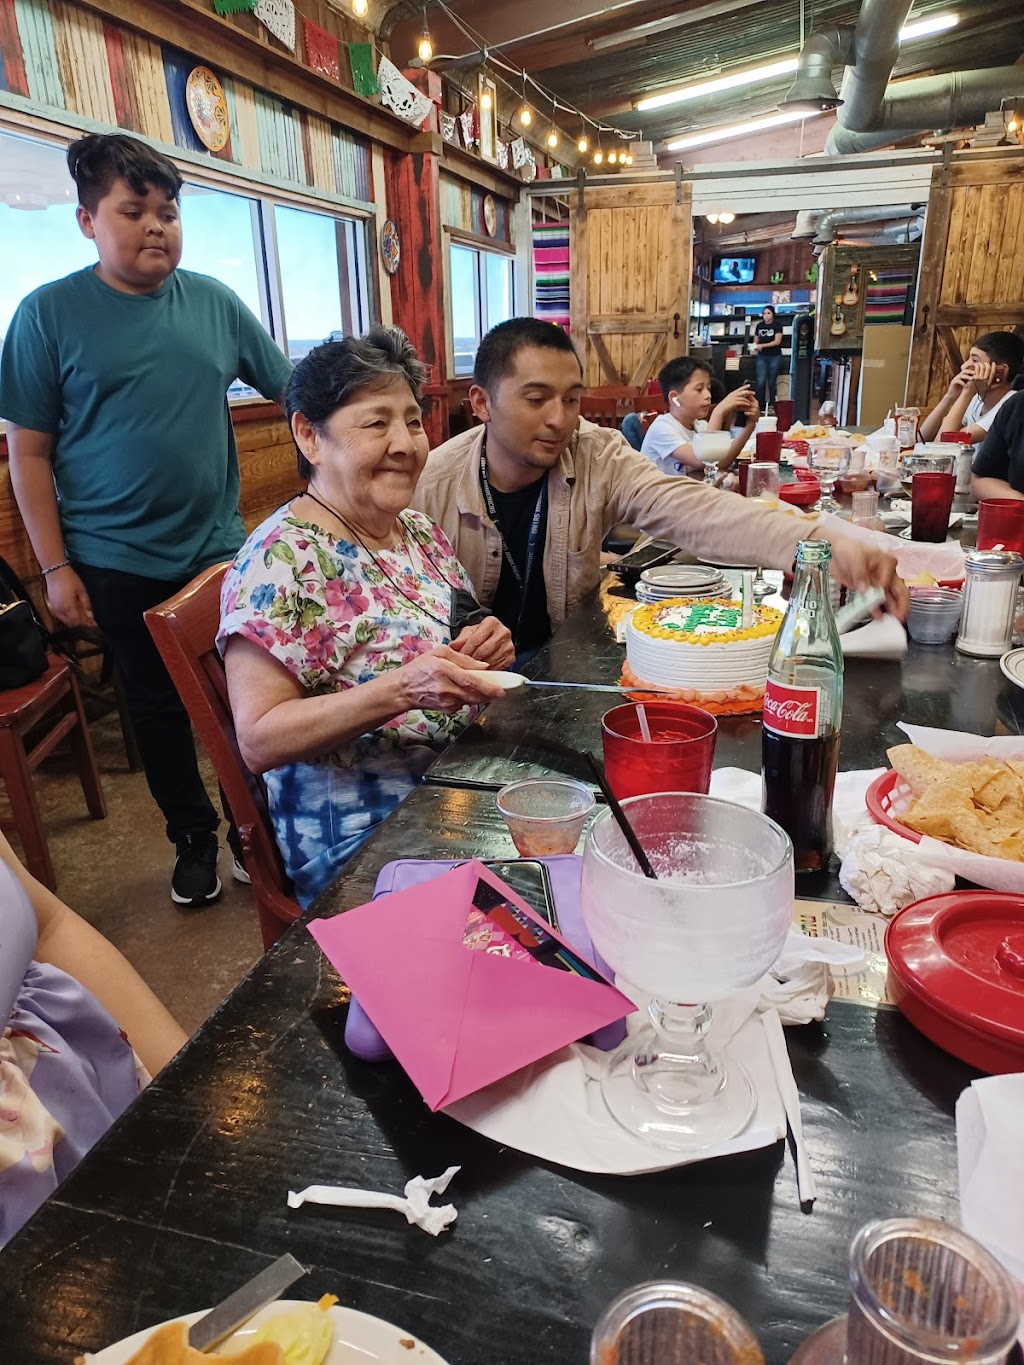 Chuys Mexican Restaurant | 9120 Boat Club Rd, Fort Worth, TX 76179, USA | Phone: (817) 507-5445